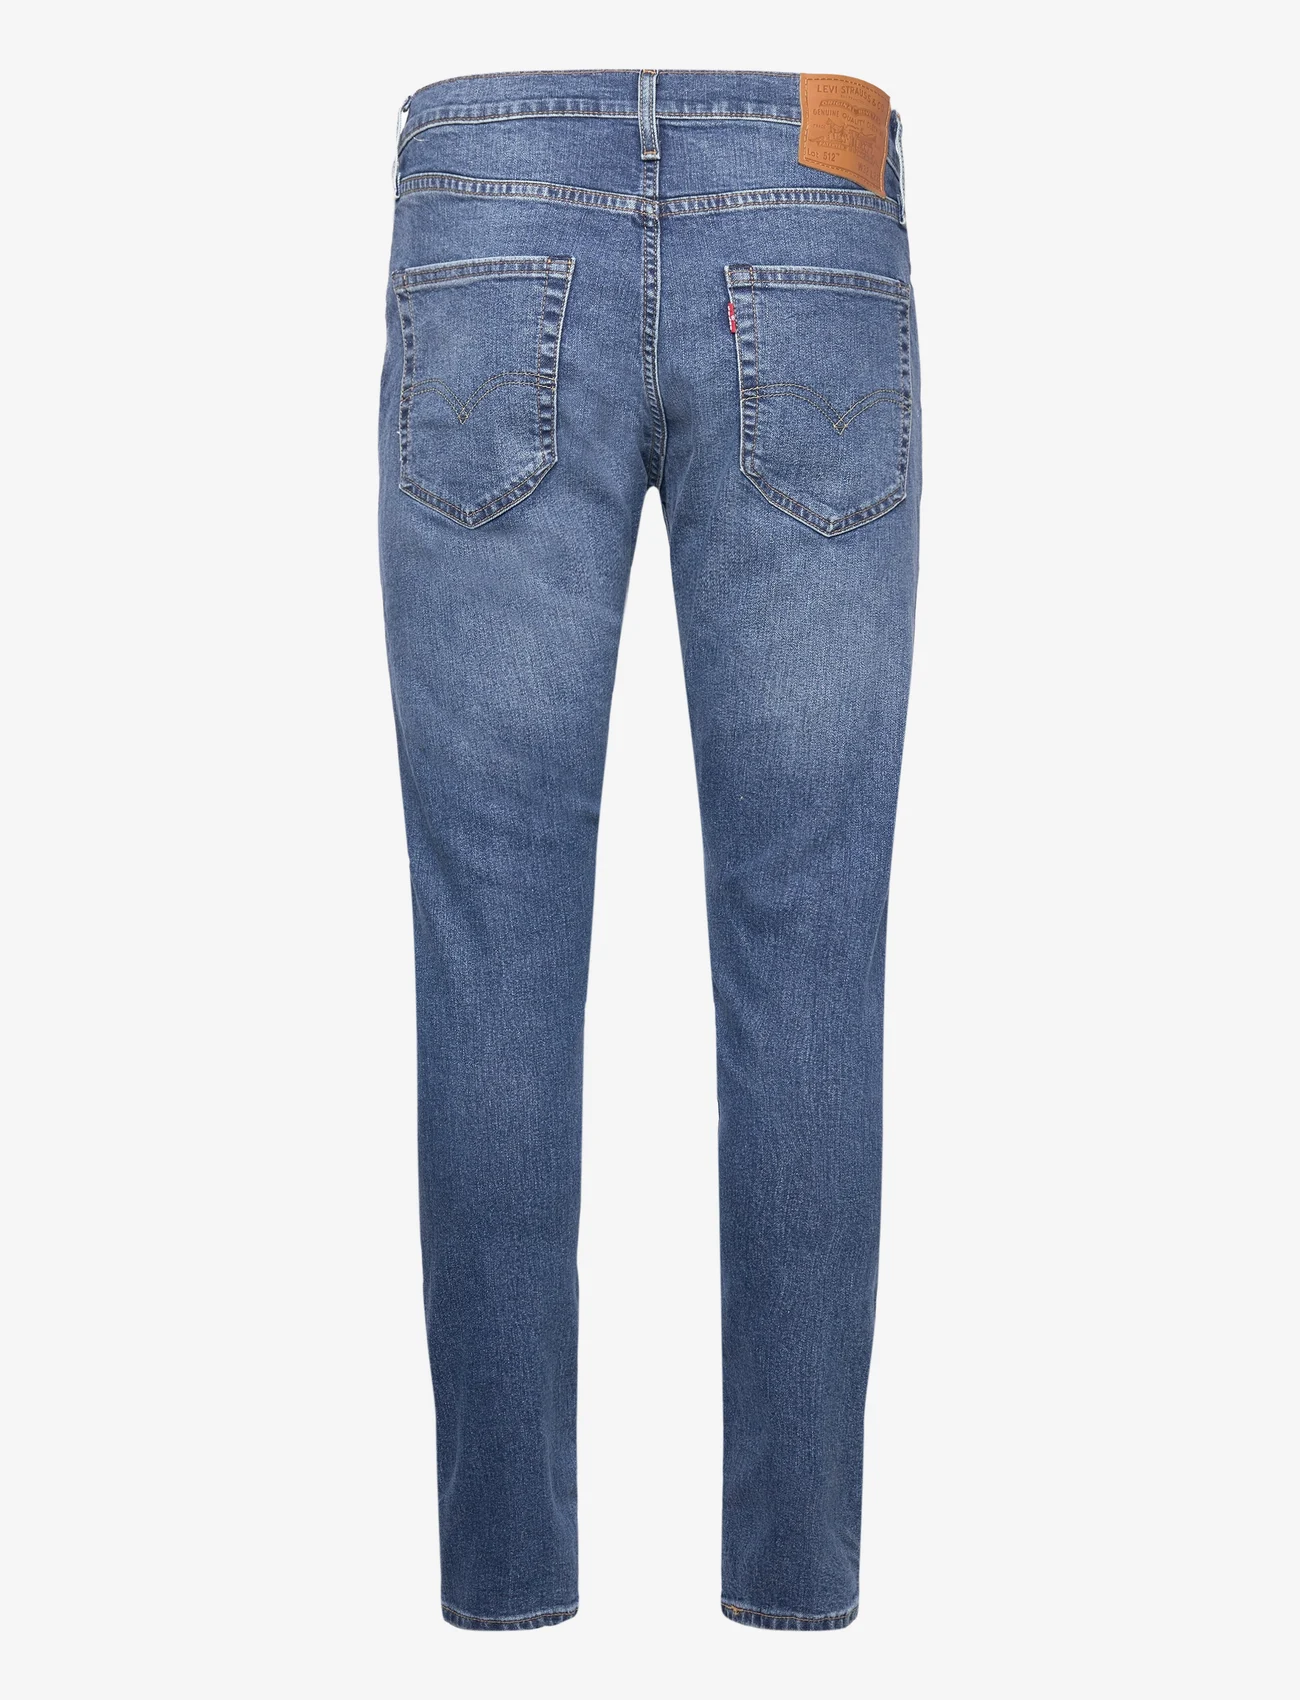 LEVI´S Men - 512 SLIM TAPER HOT N WARM - slim jeans - med indigo - worn in - 1